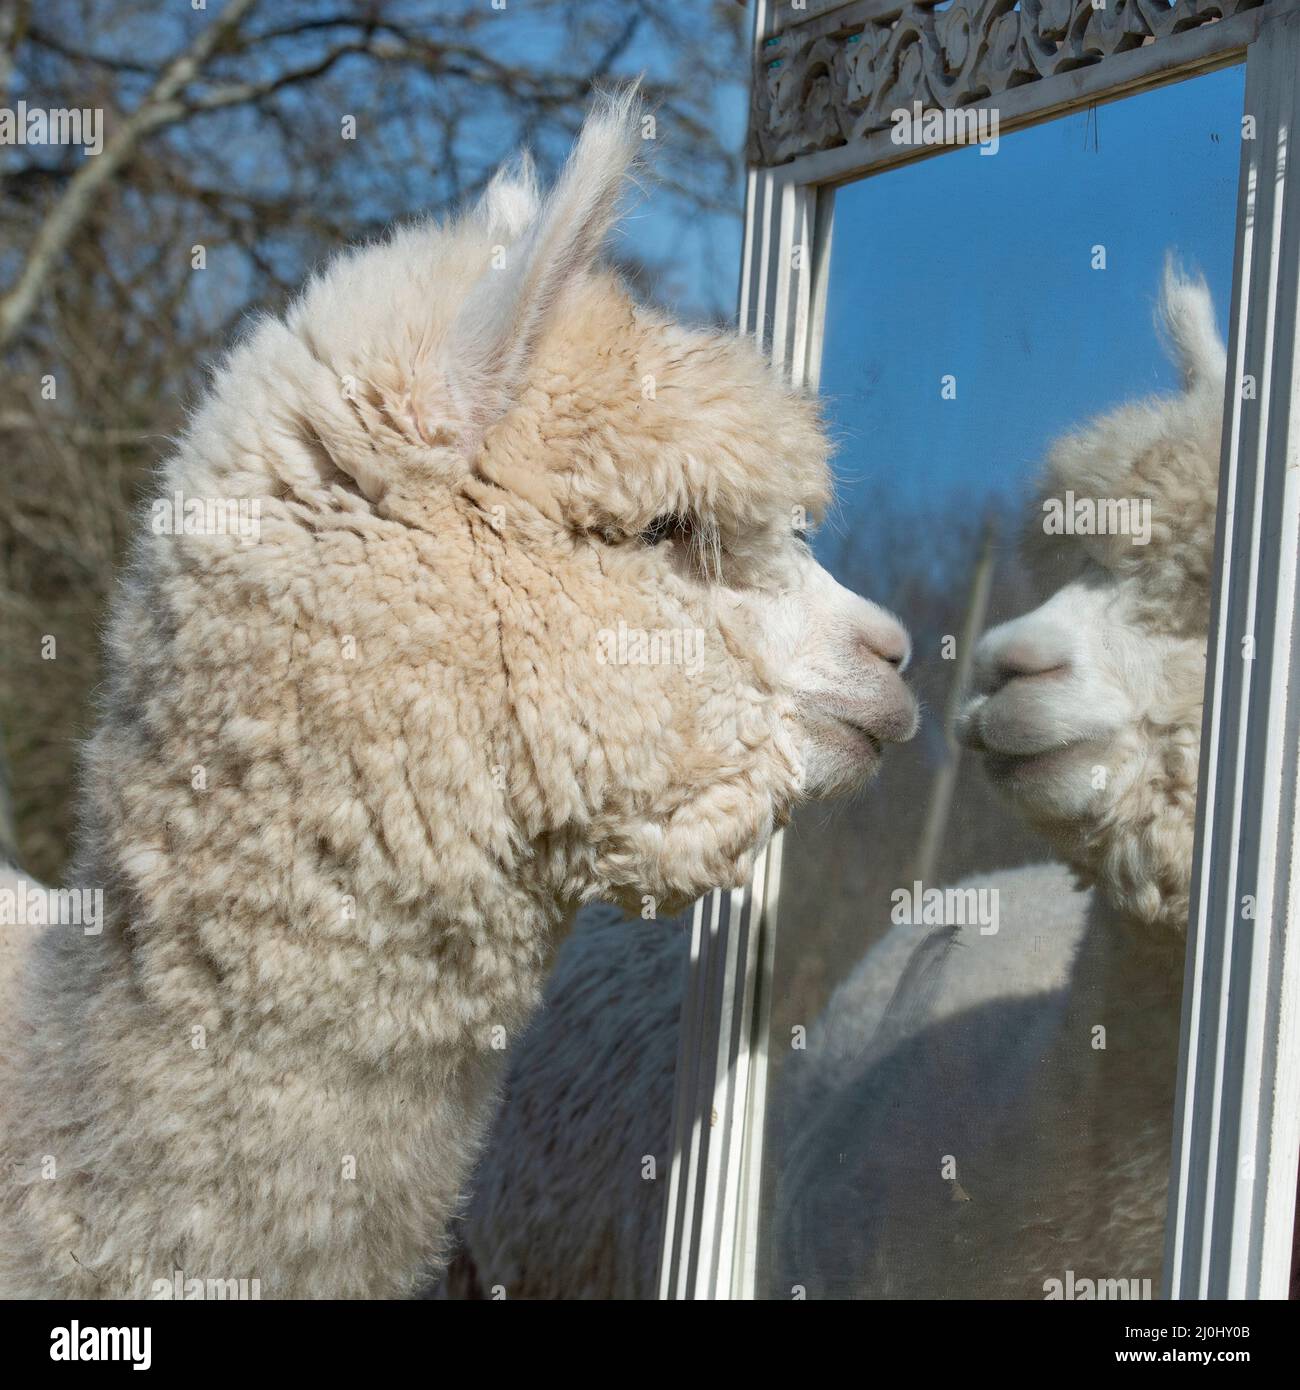 alpaca looking at itself in mirror Stock Photo